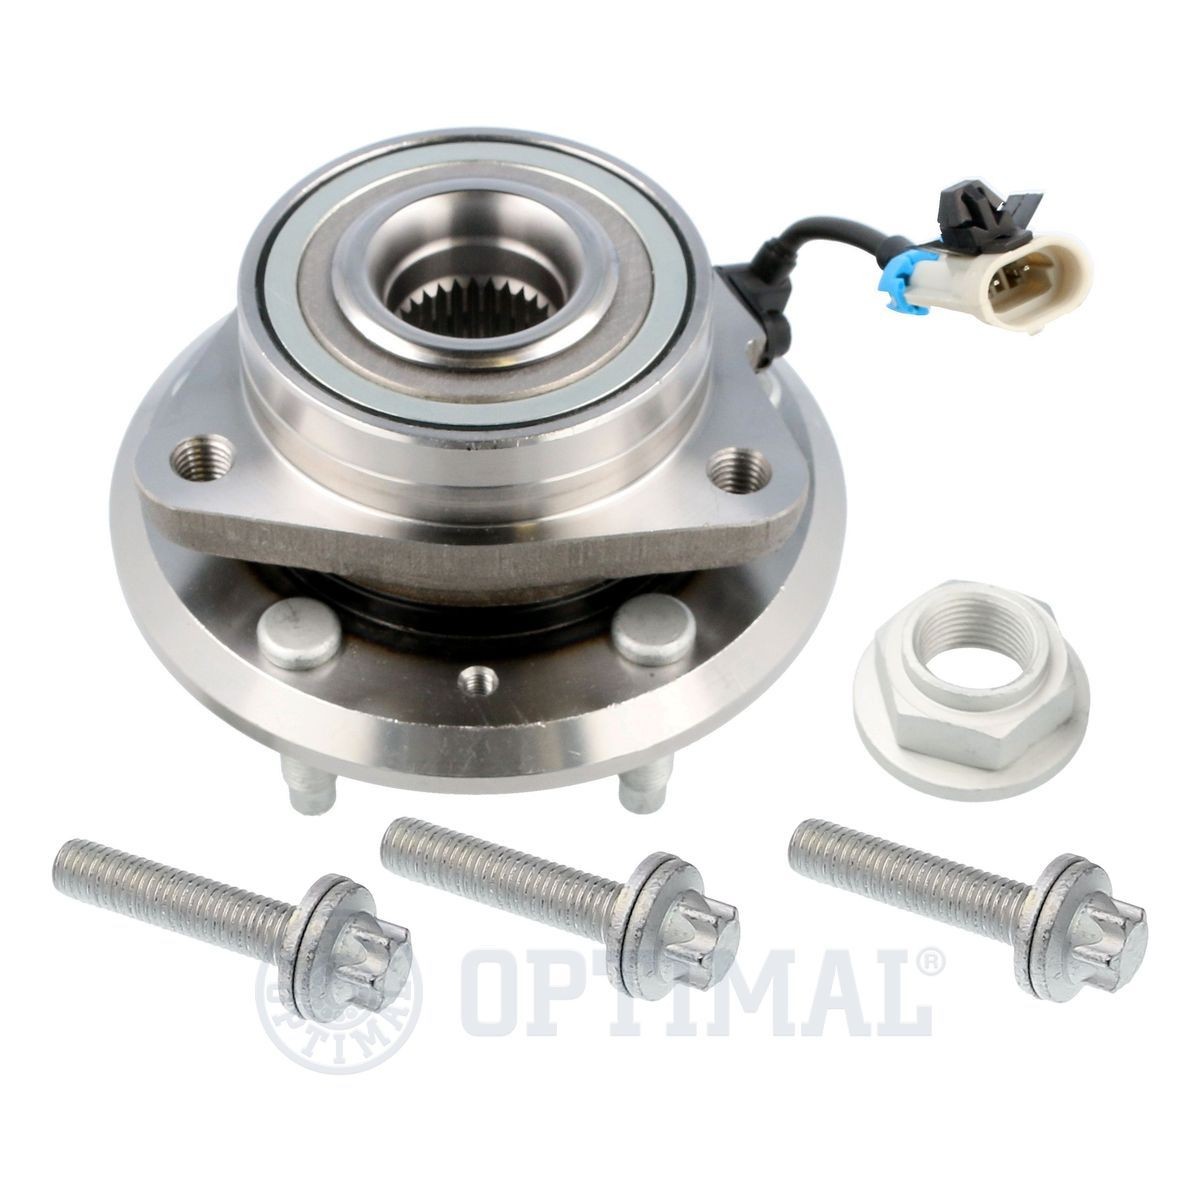 OPTIMAL 251791 Wheel bearing kit with integrated magnetic sensor ring, 151 mm